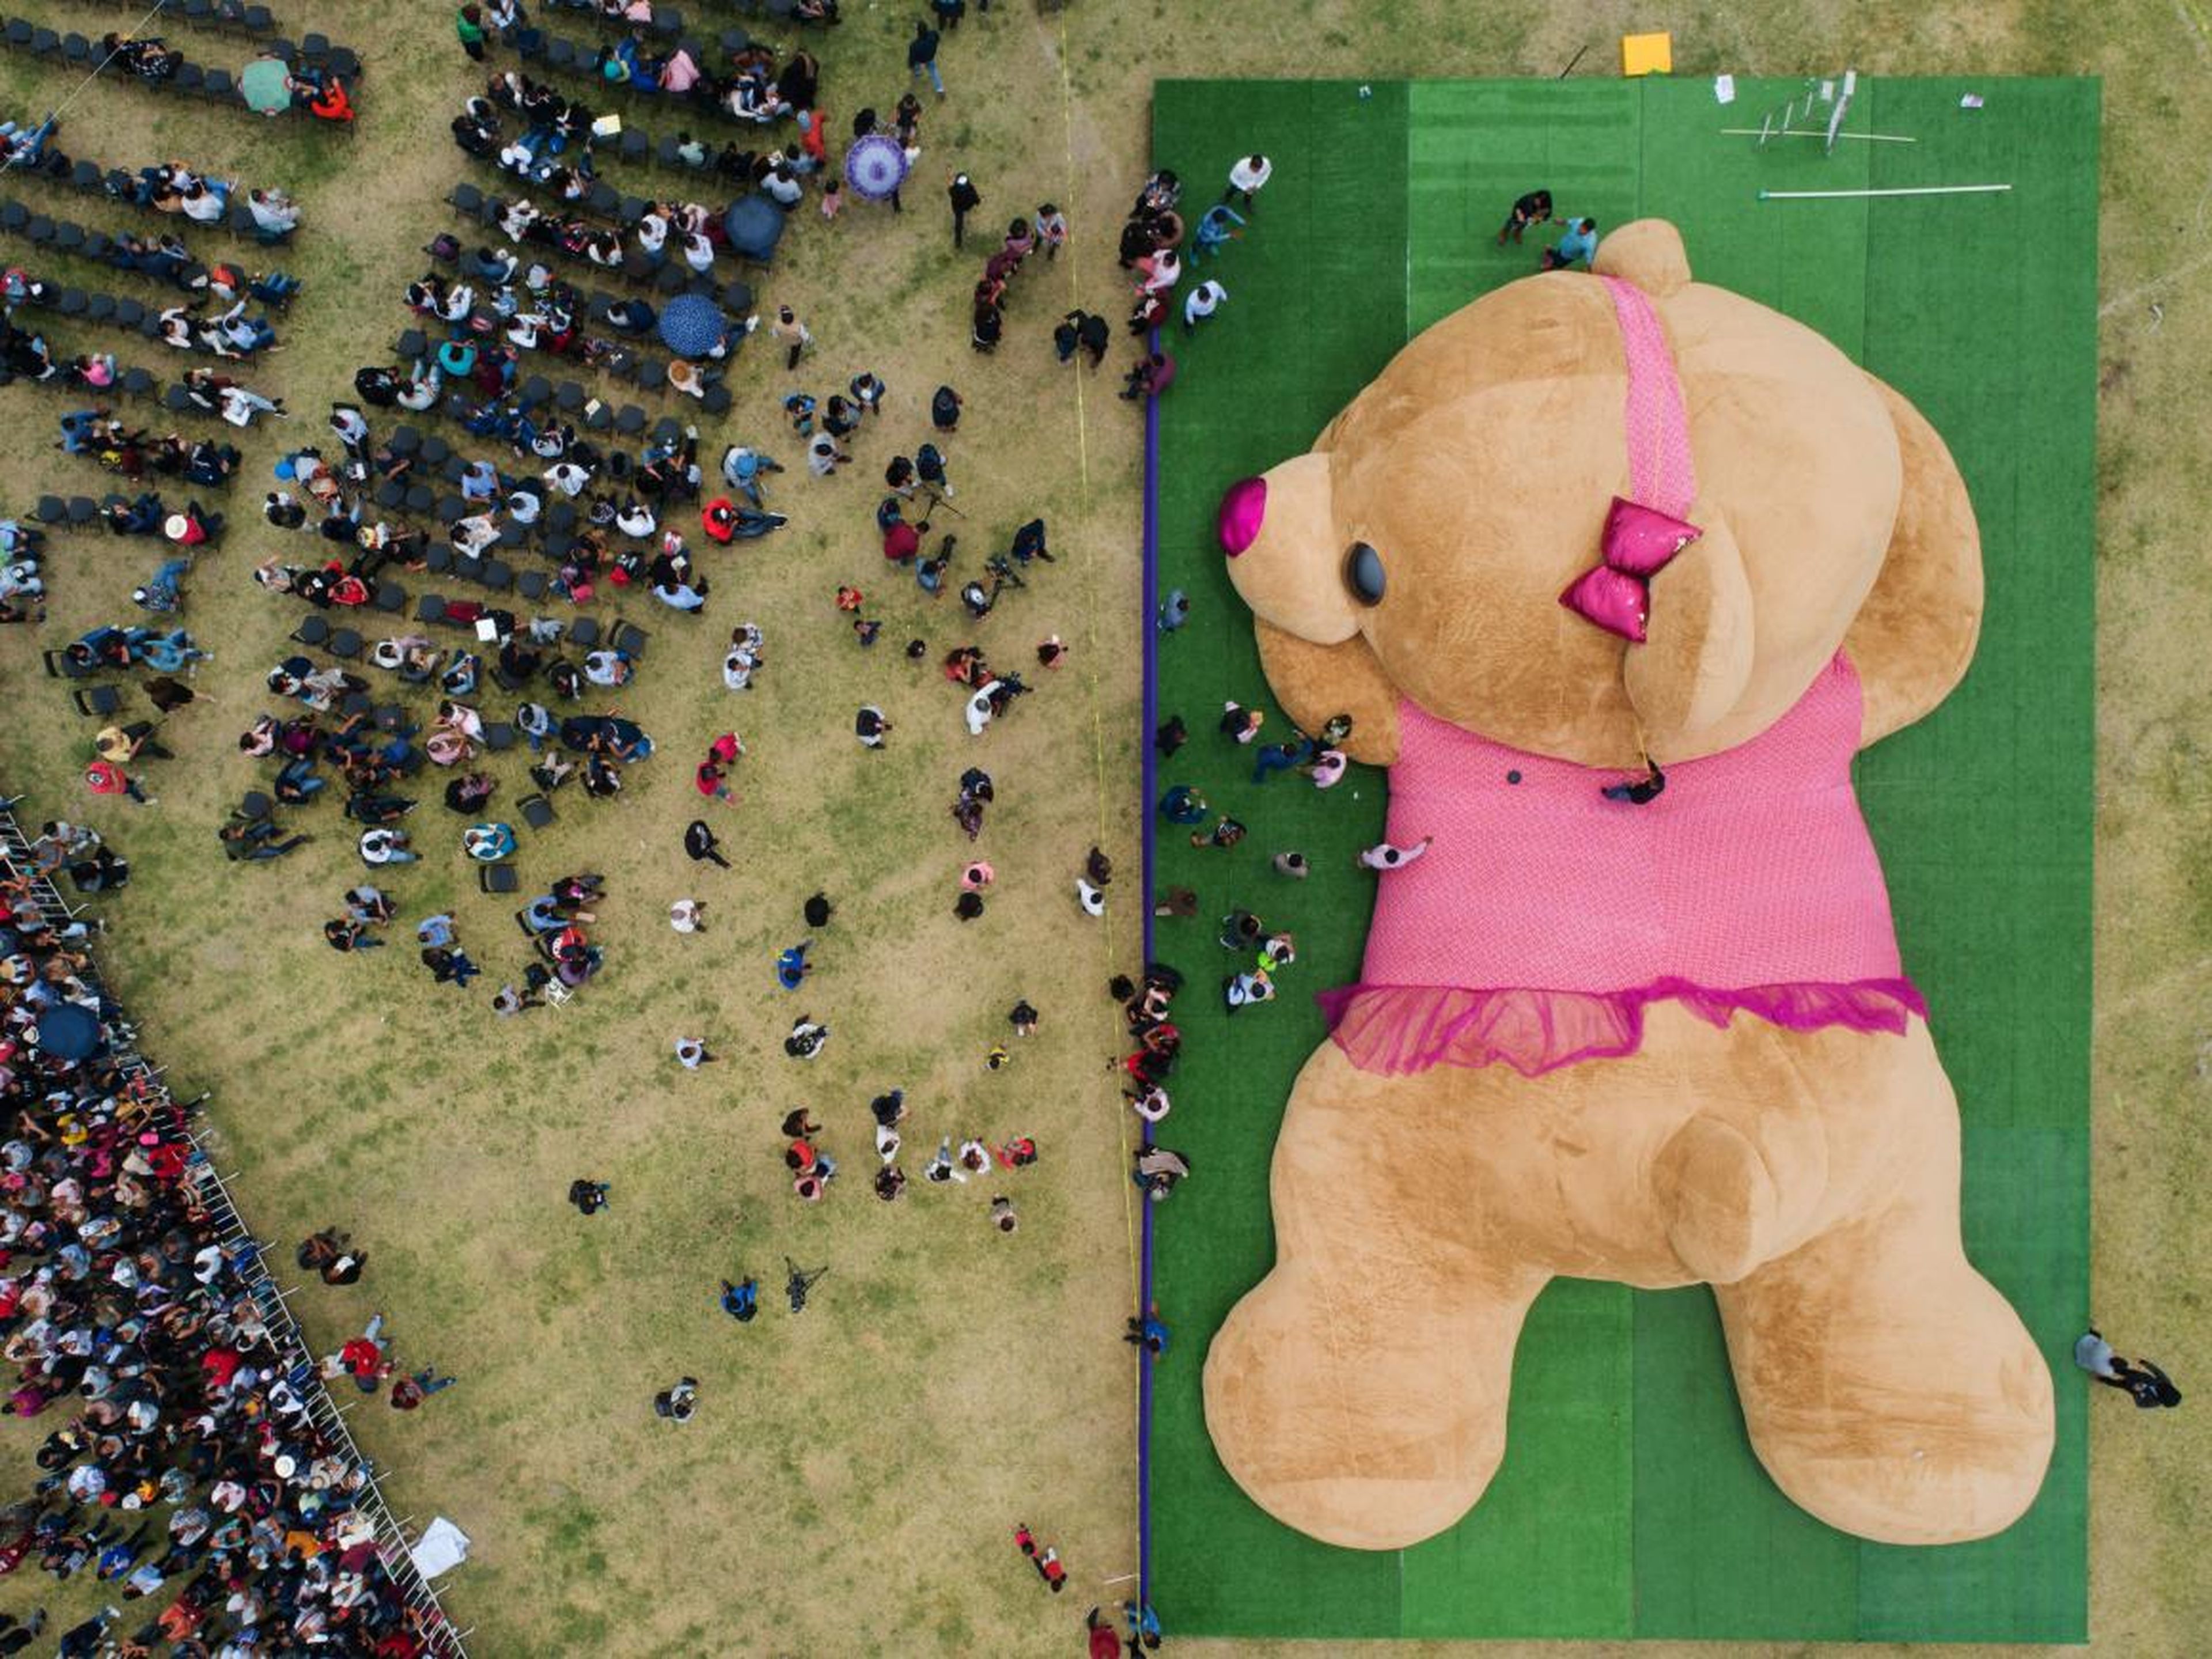 The world's largest teddy bear.